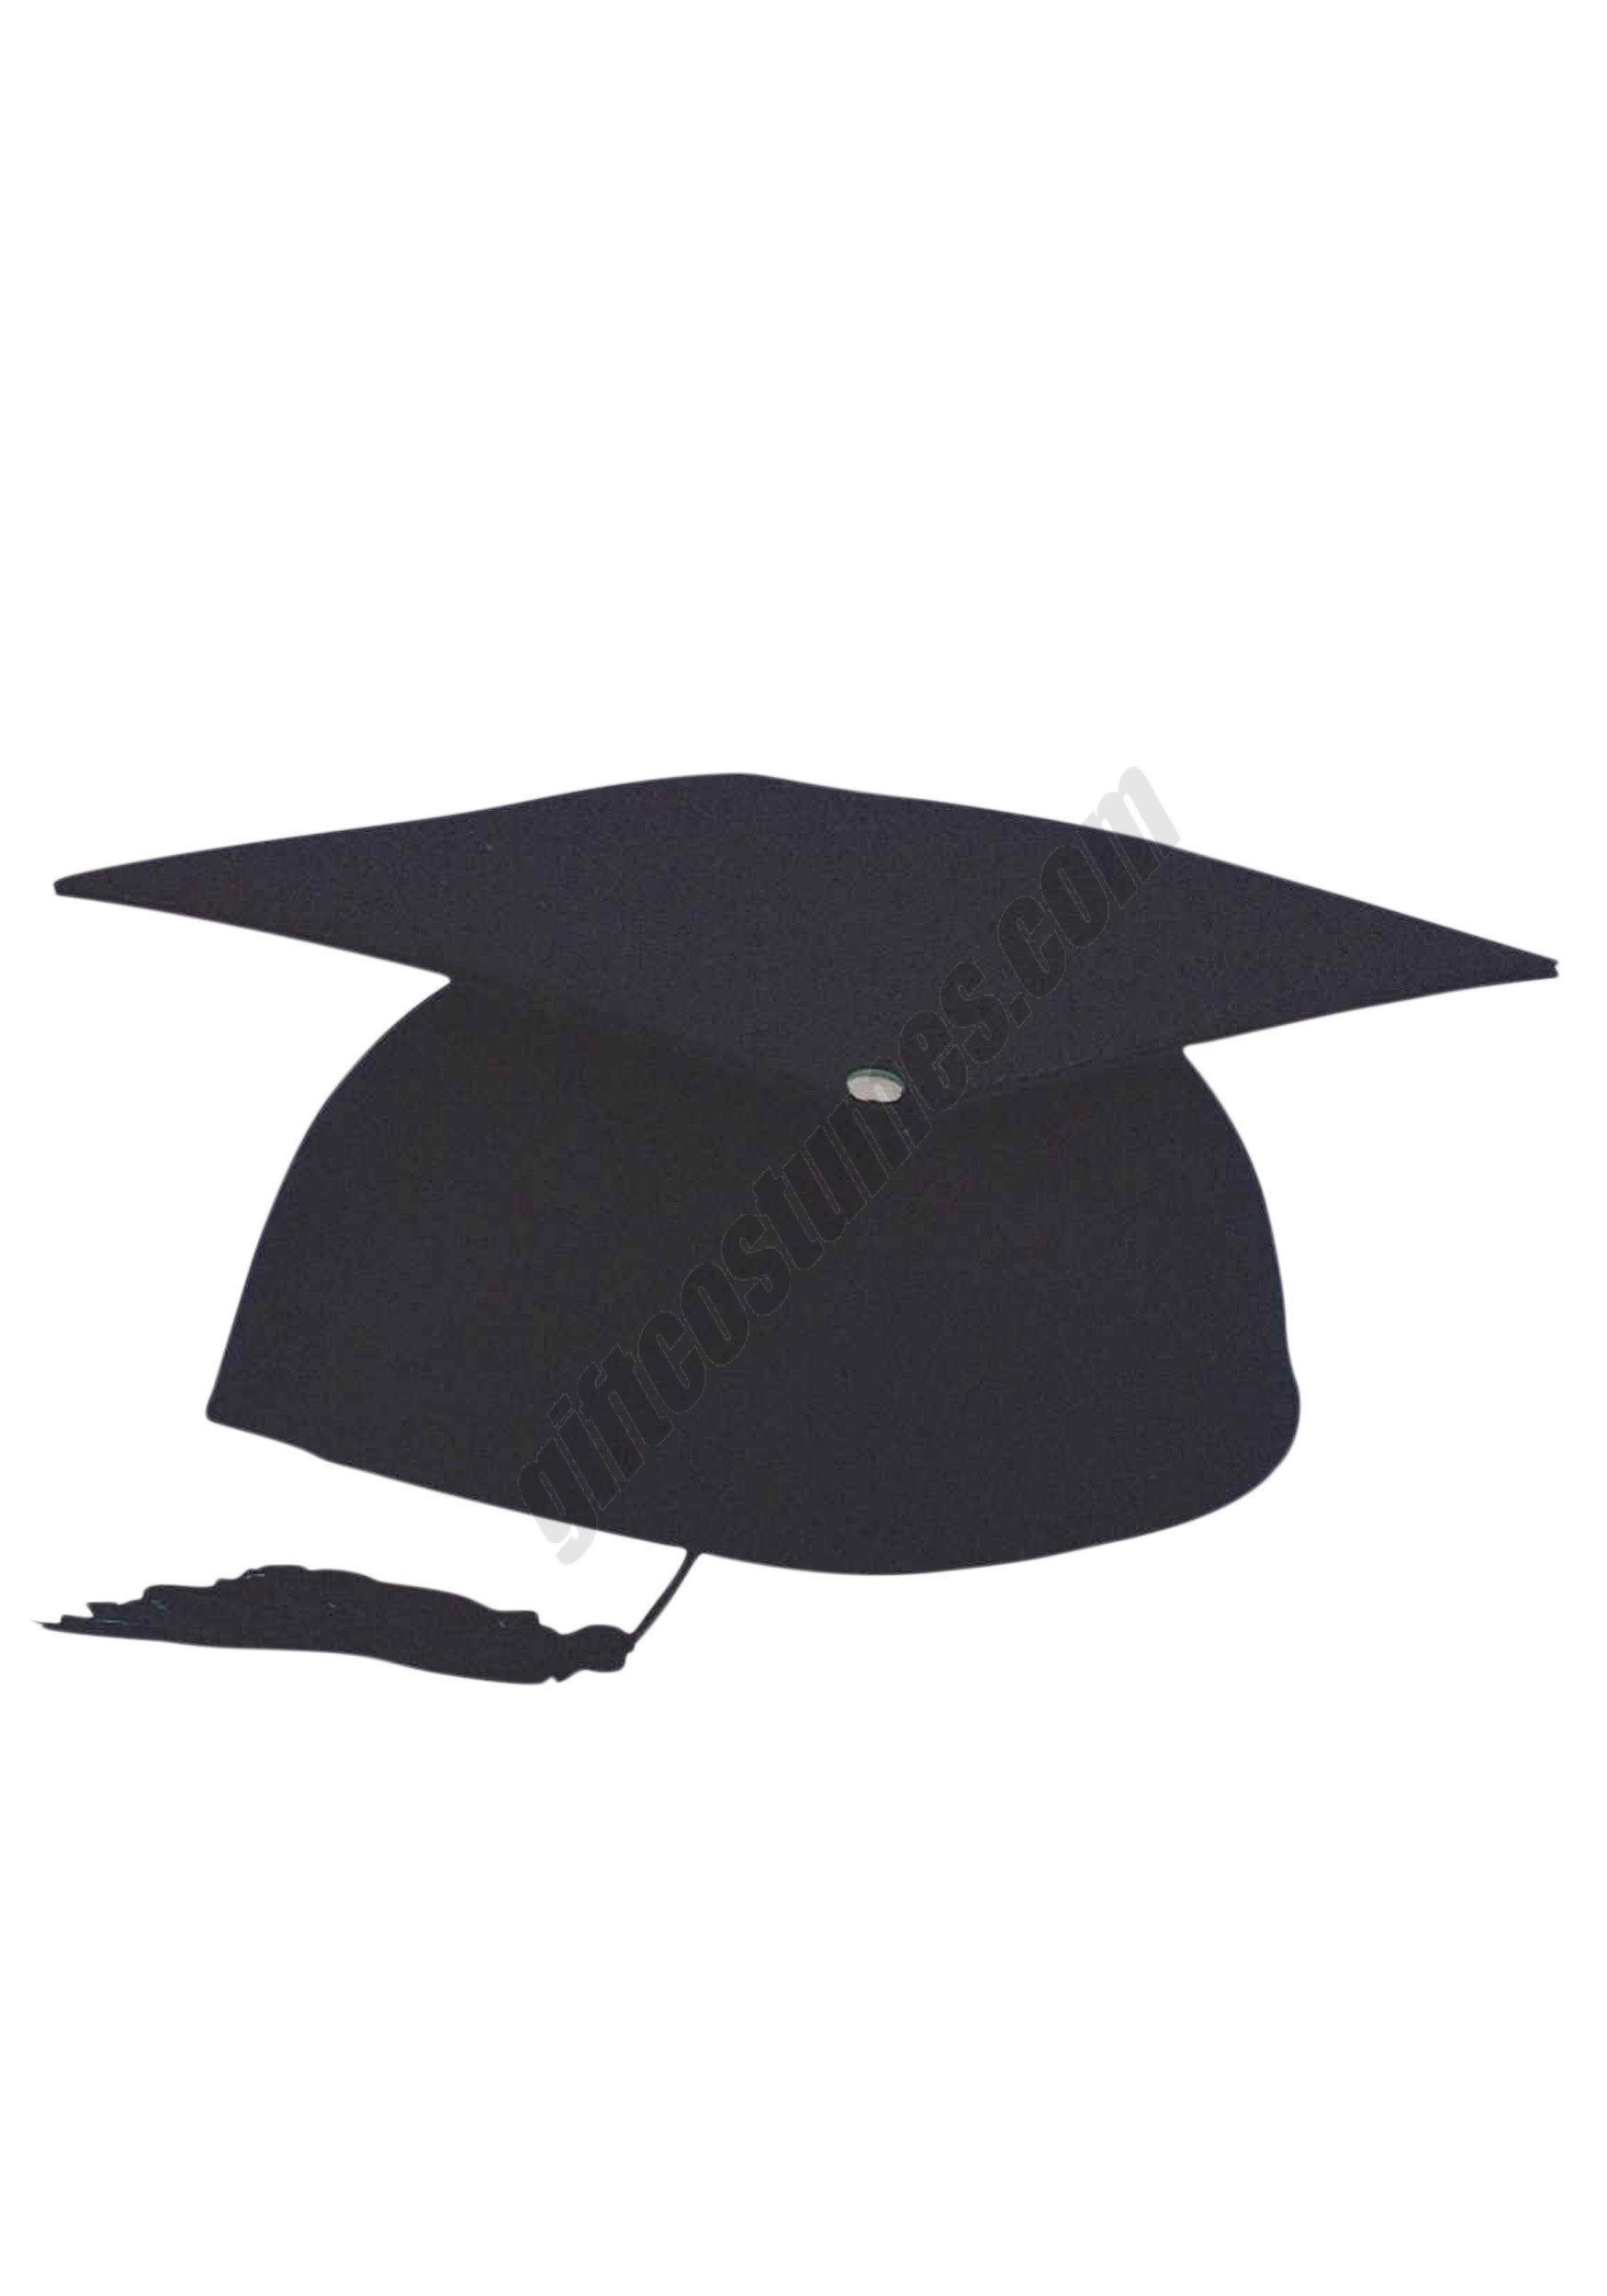 Black Graduation Cap Promotions - Black Graduation Cap Promotions